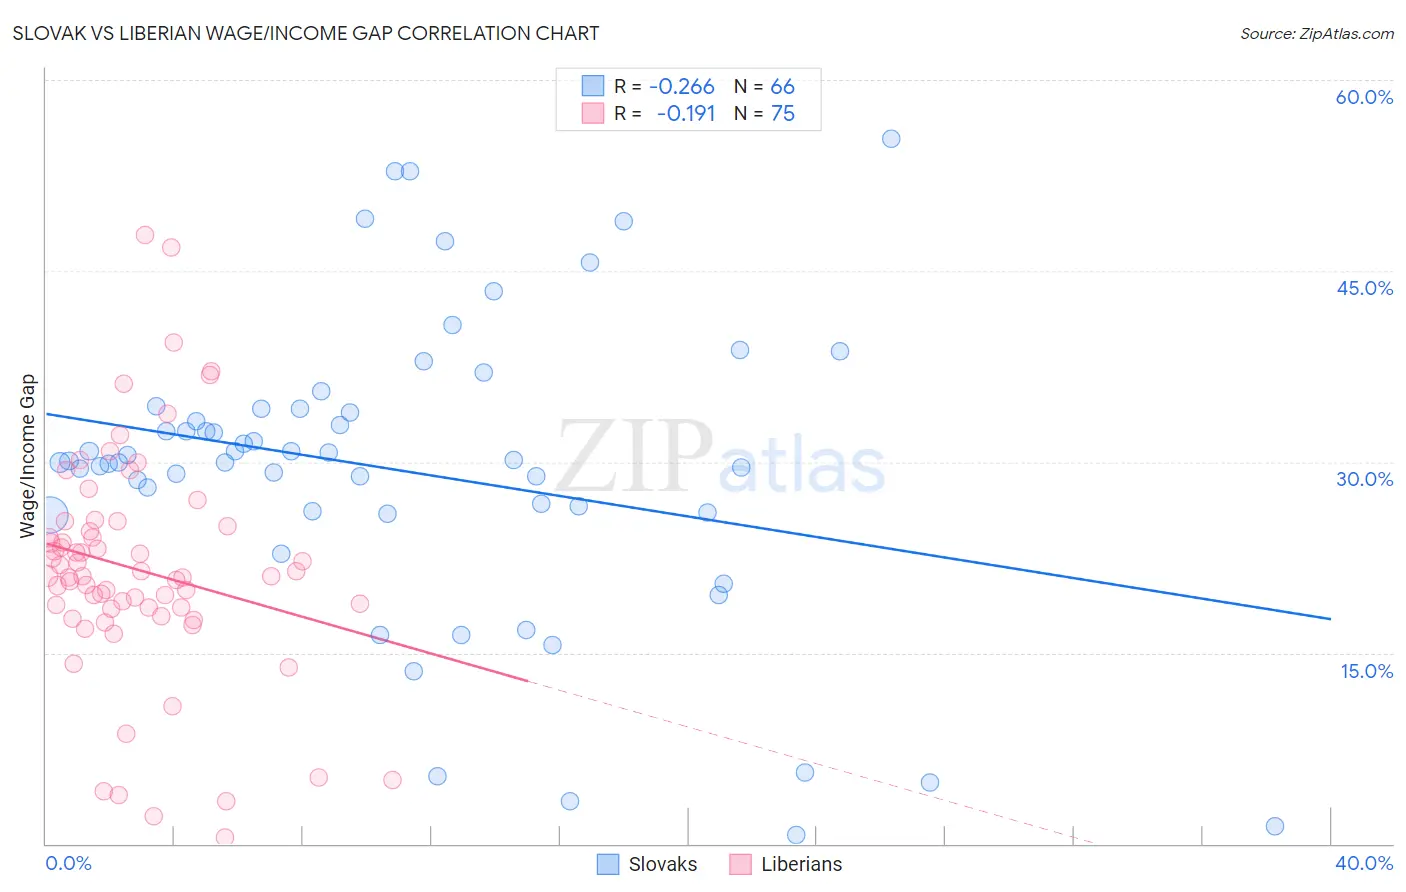 Slovak vs Liberian Wage/Income Gap